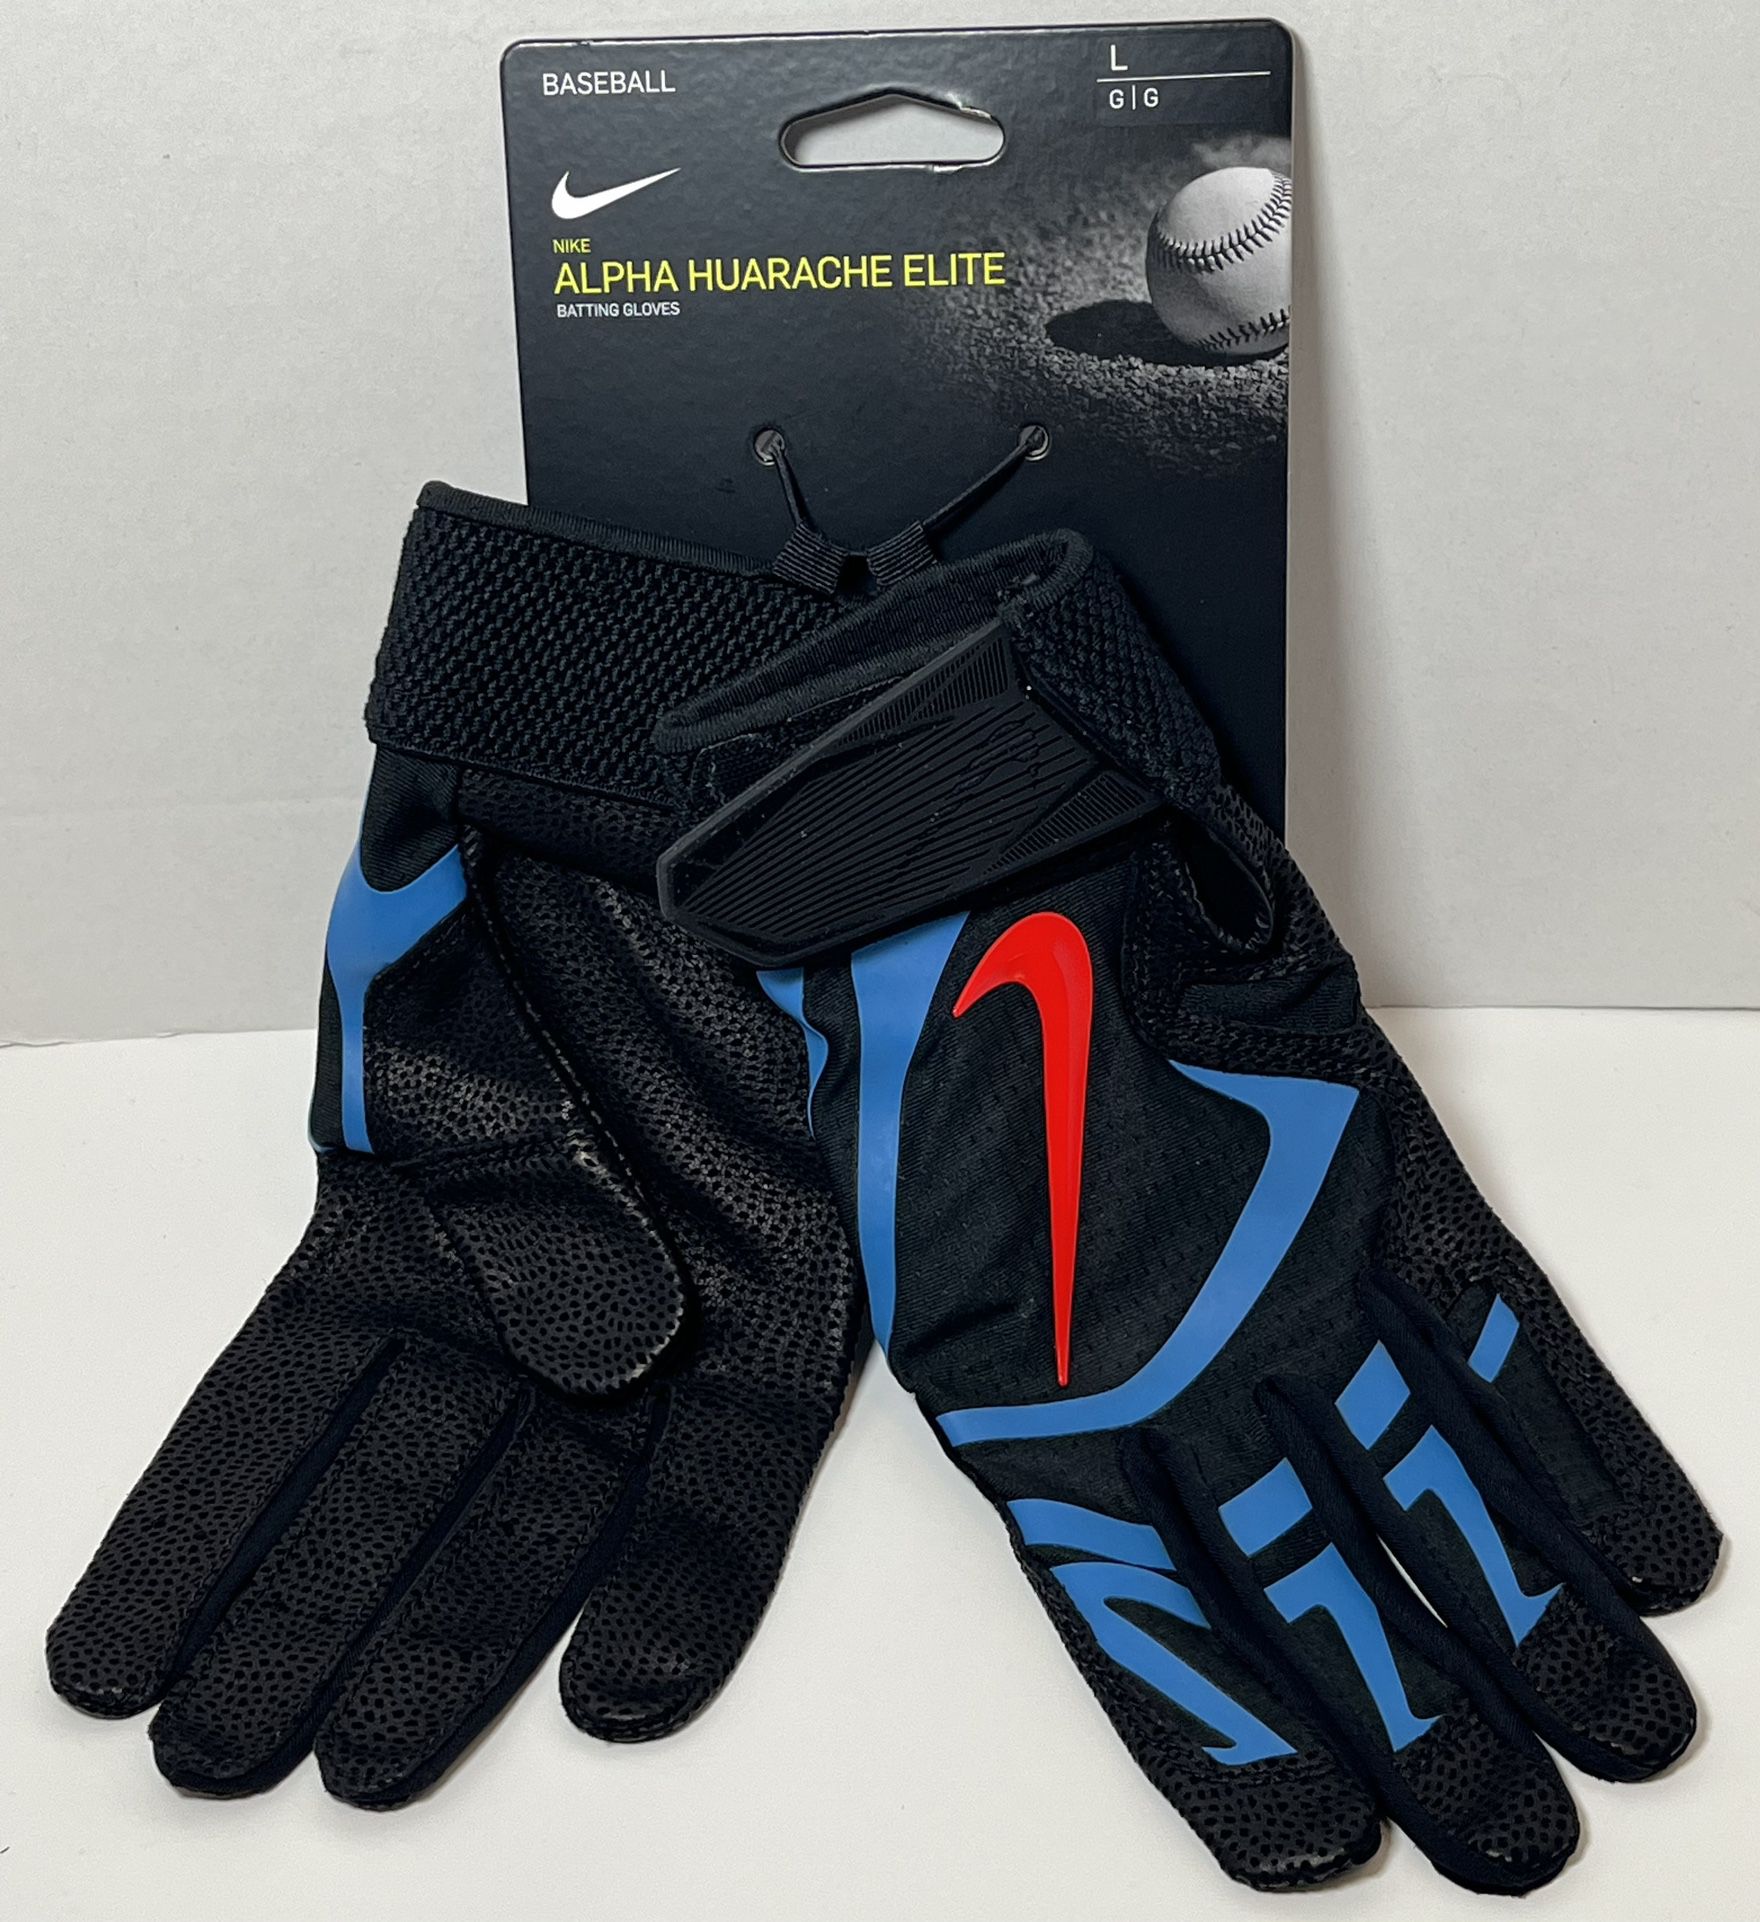 Nike Alpha Huarache Elite Baseball Batting Gloves Black Blue Red Size Large & 2XL CV0720-090 New